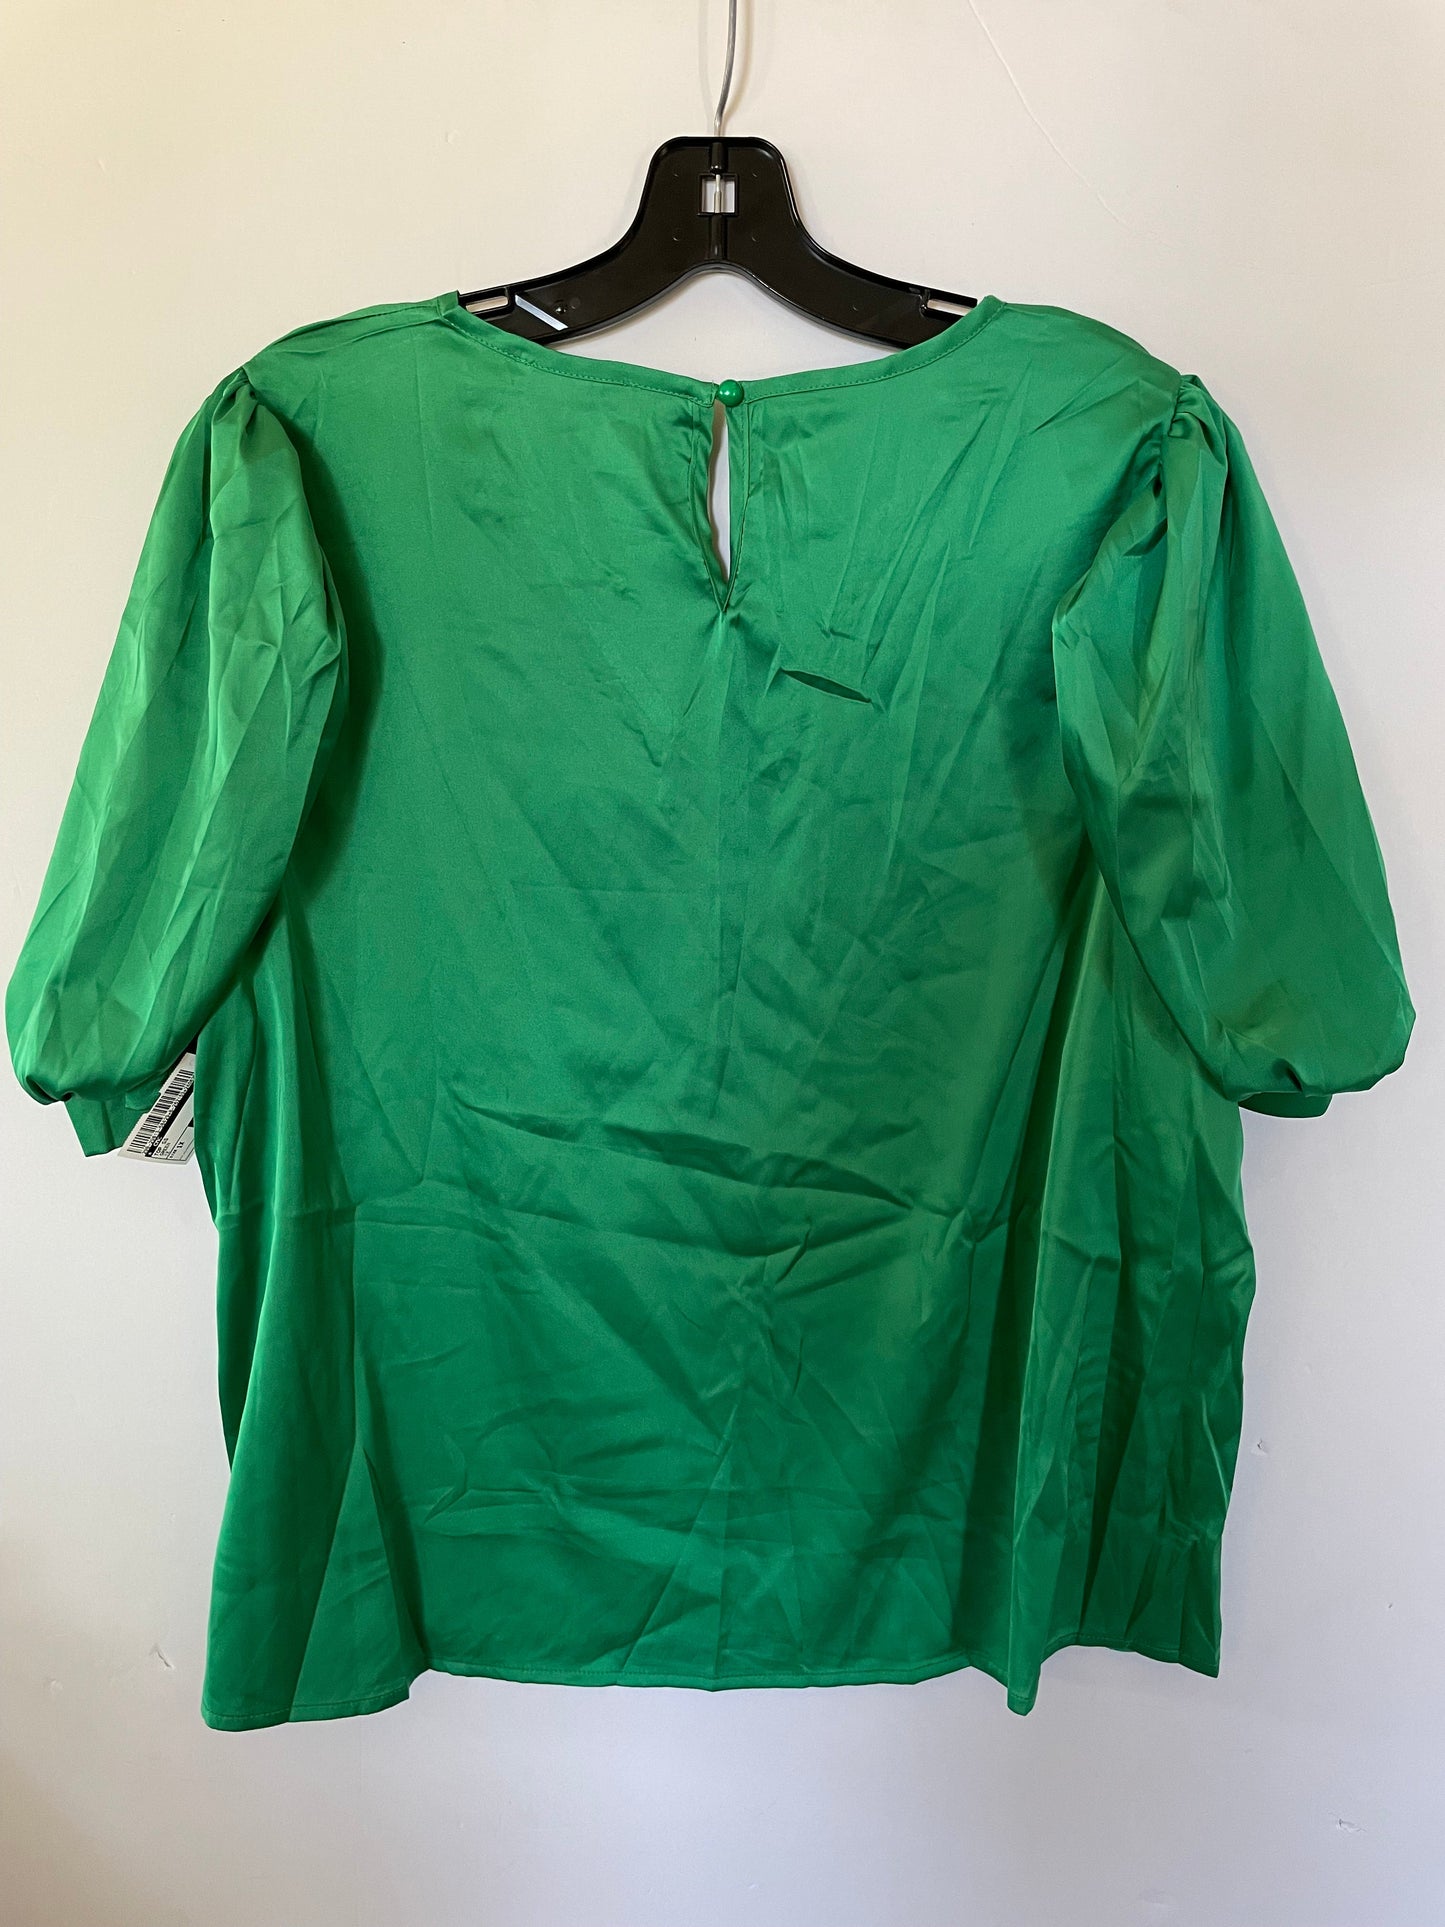 Green Top Short Sleeve Cmc, Size 1x